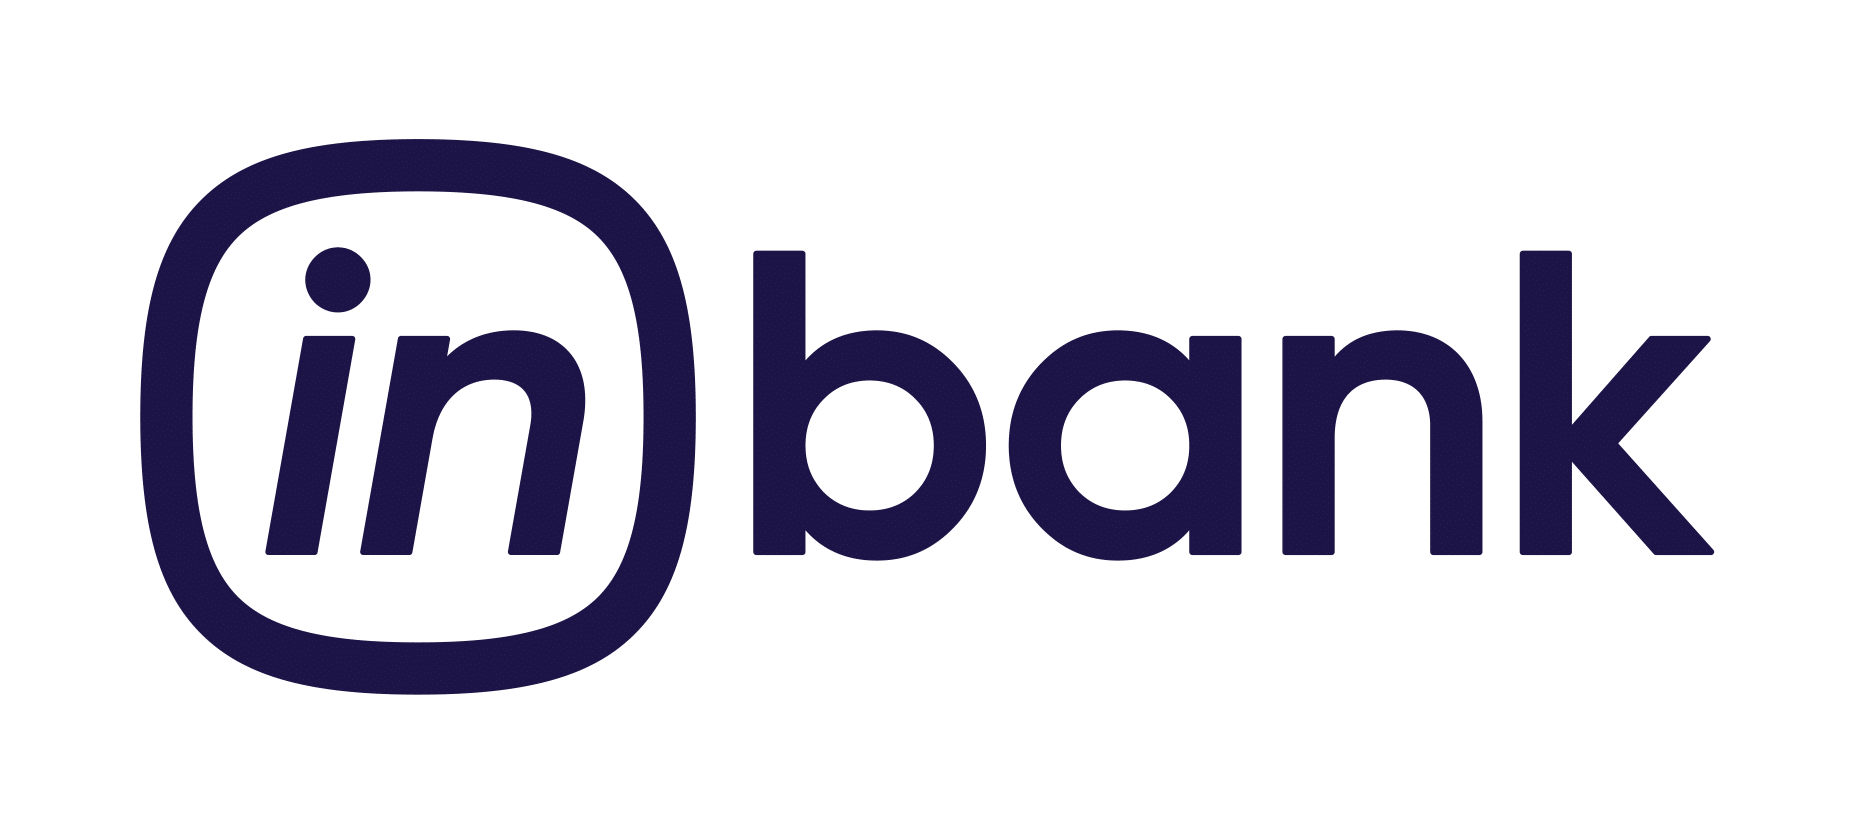 Inbank logotipas